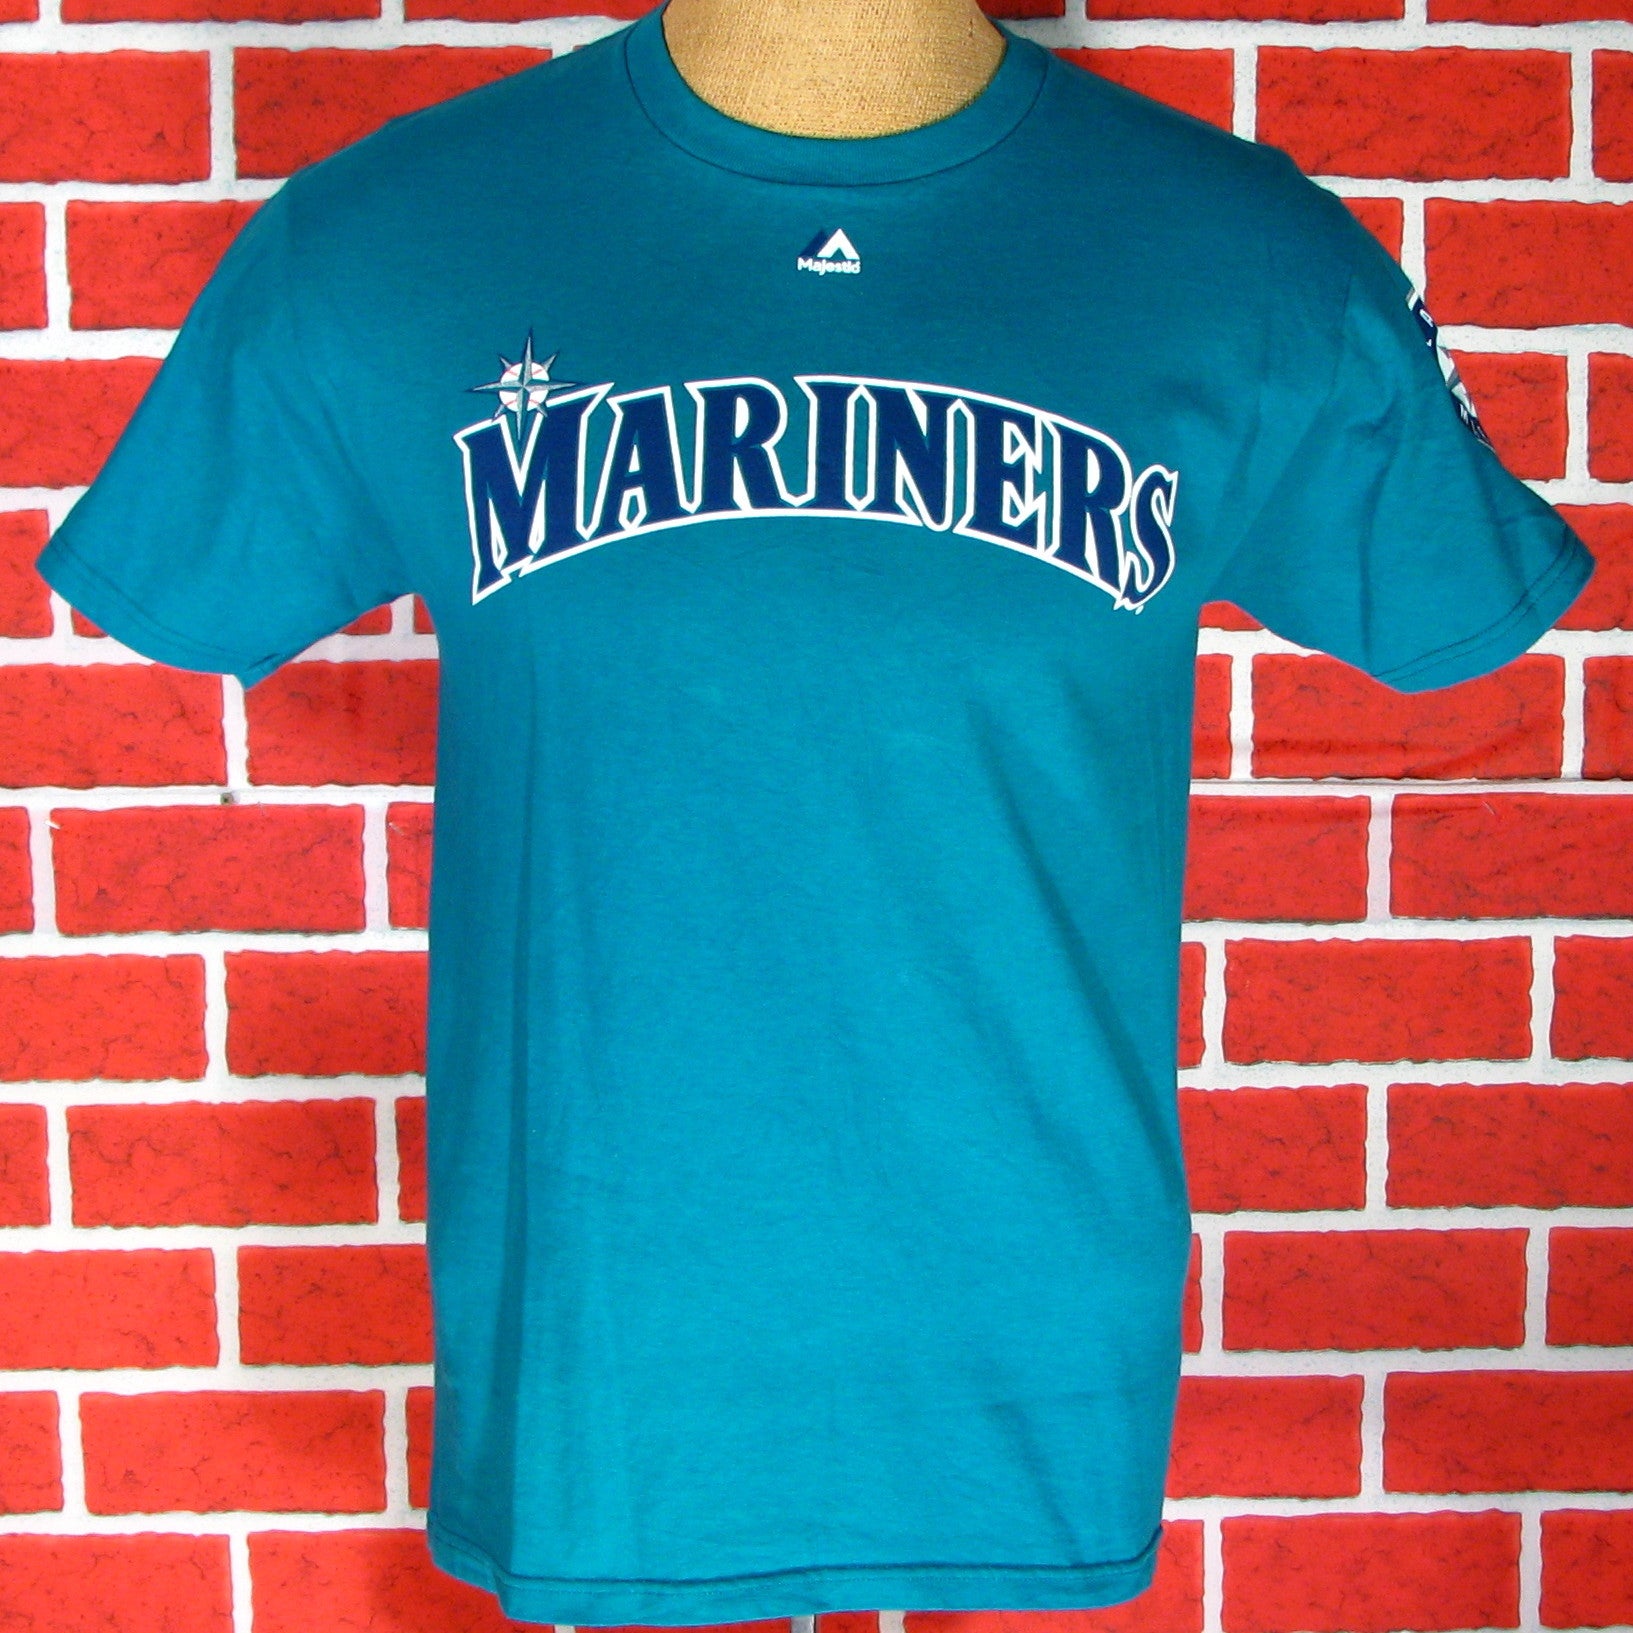 vintage mariners t shirt